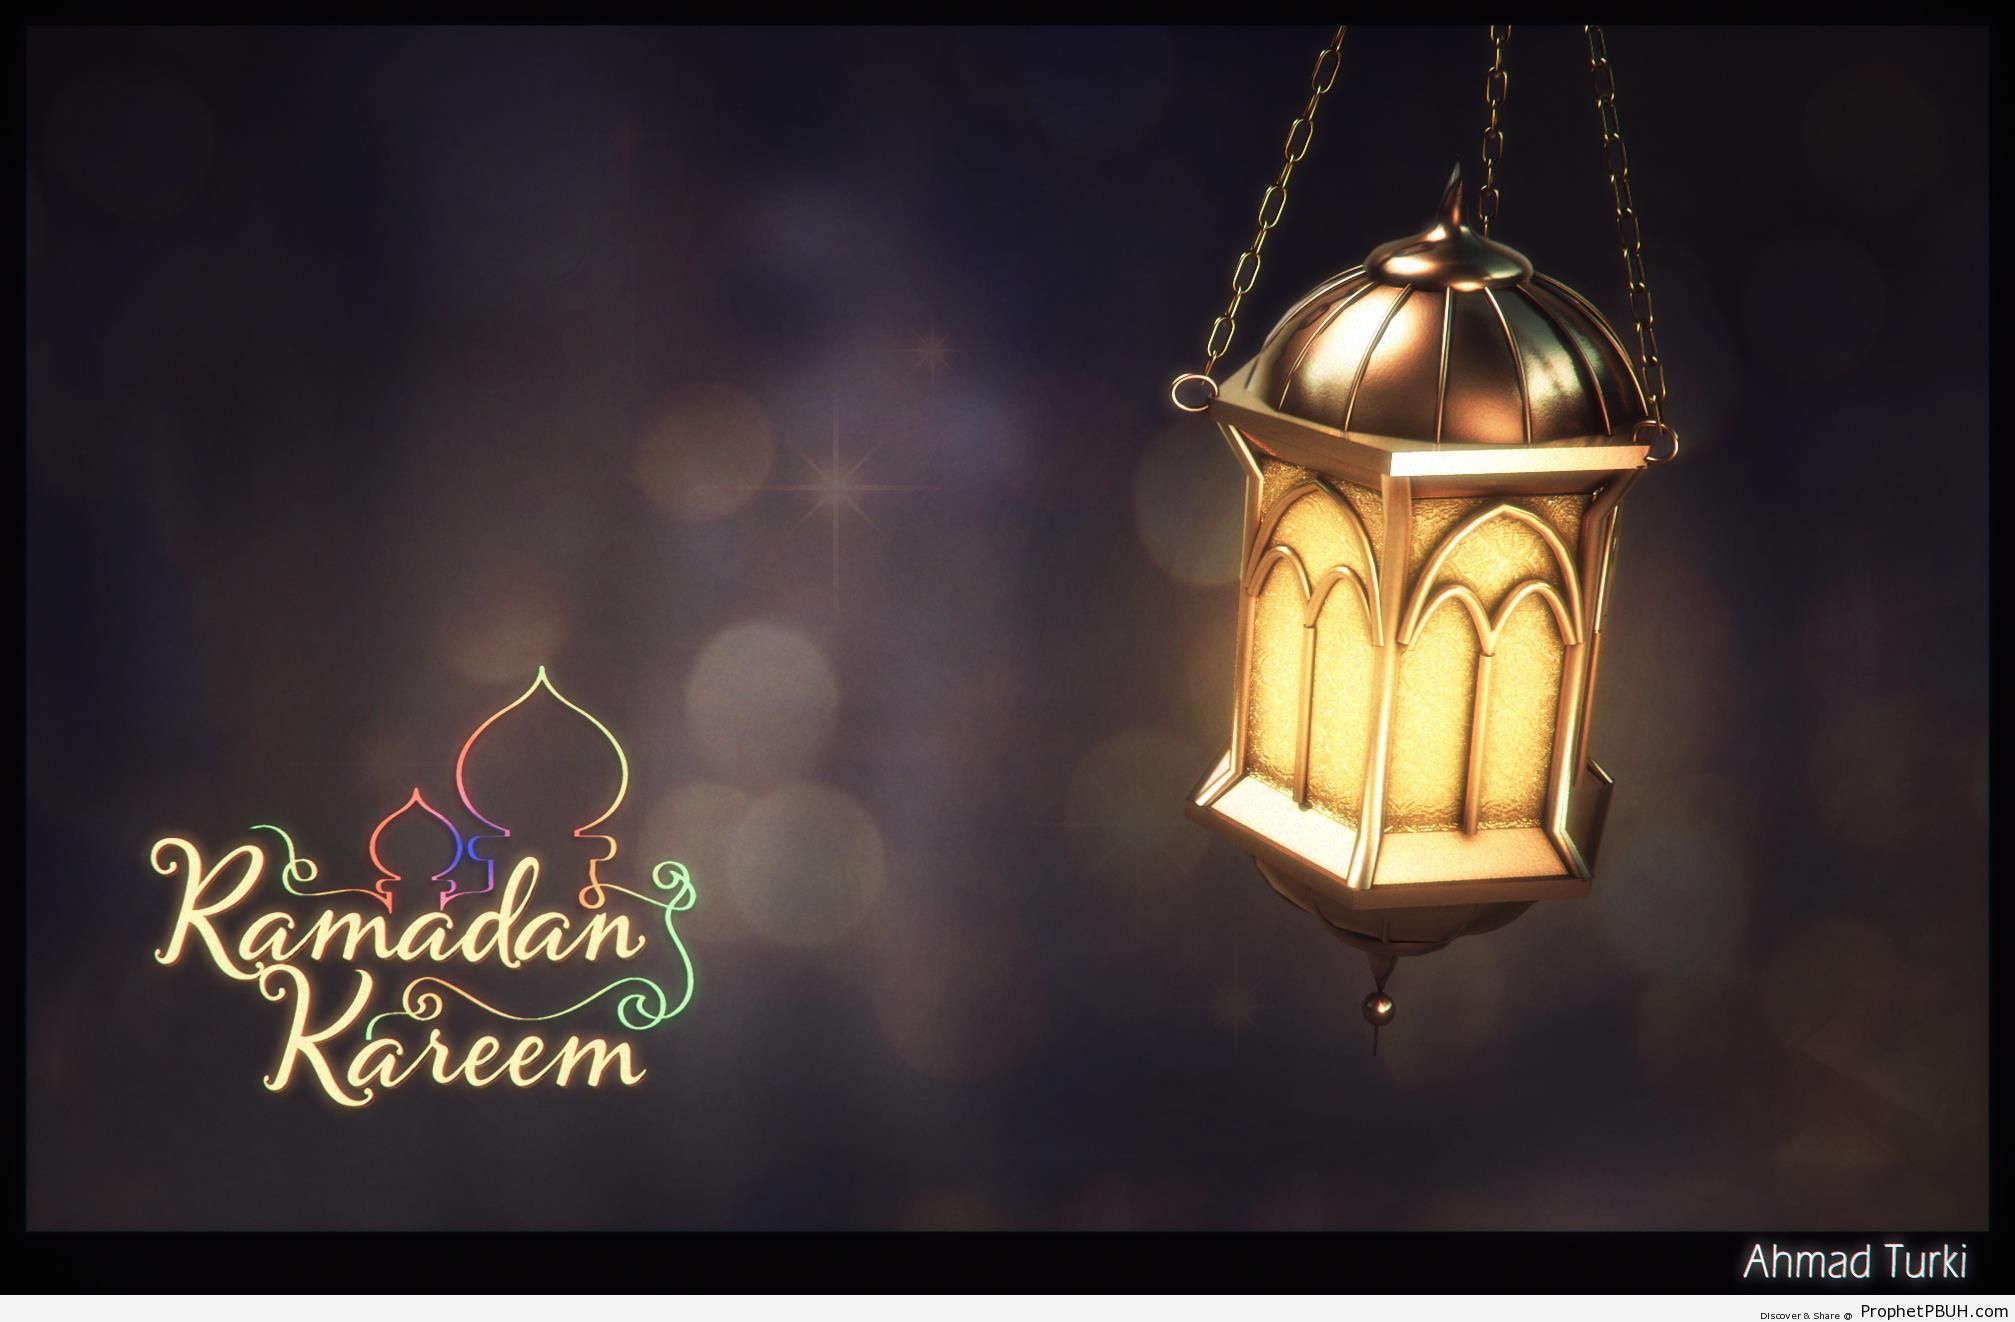 Ramadan Kareem with Arabian Lantern - Islamic Greeting Cards and Wallpapers 